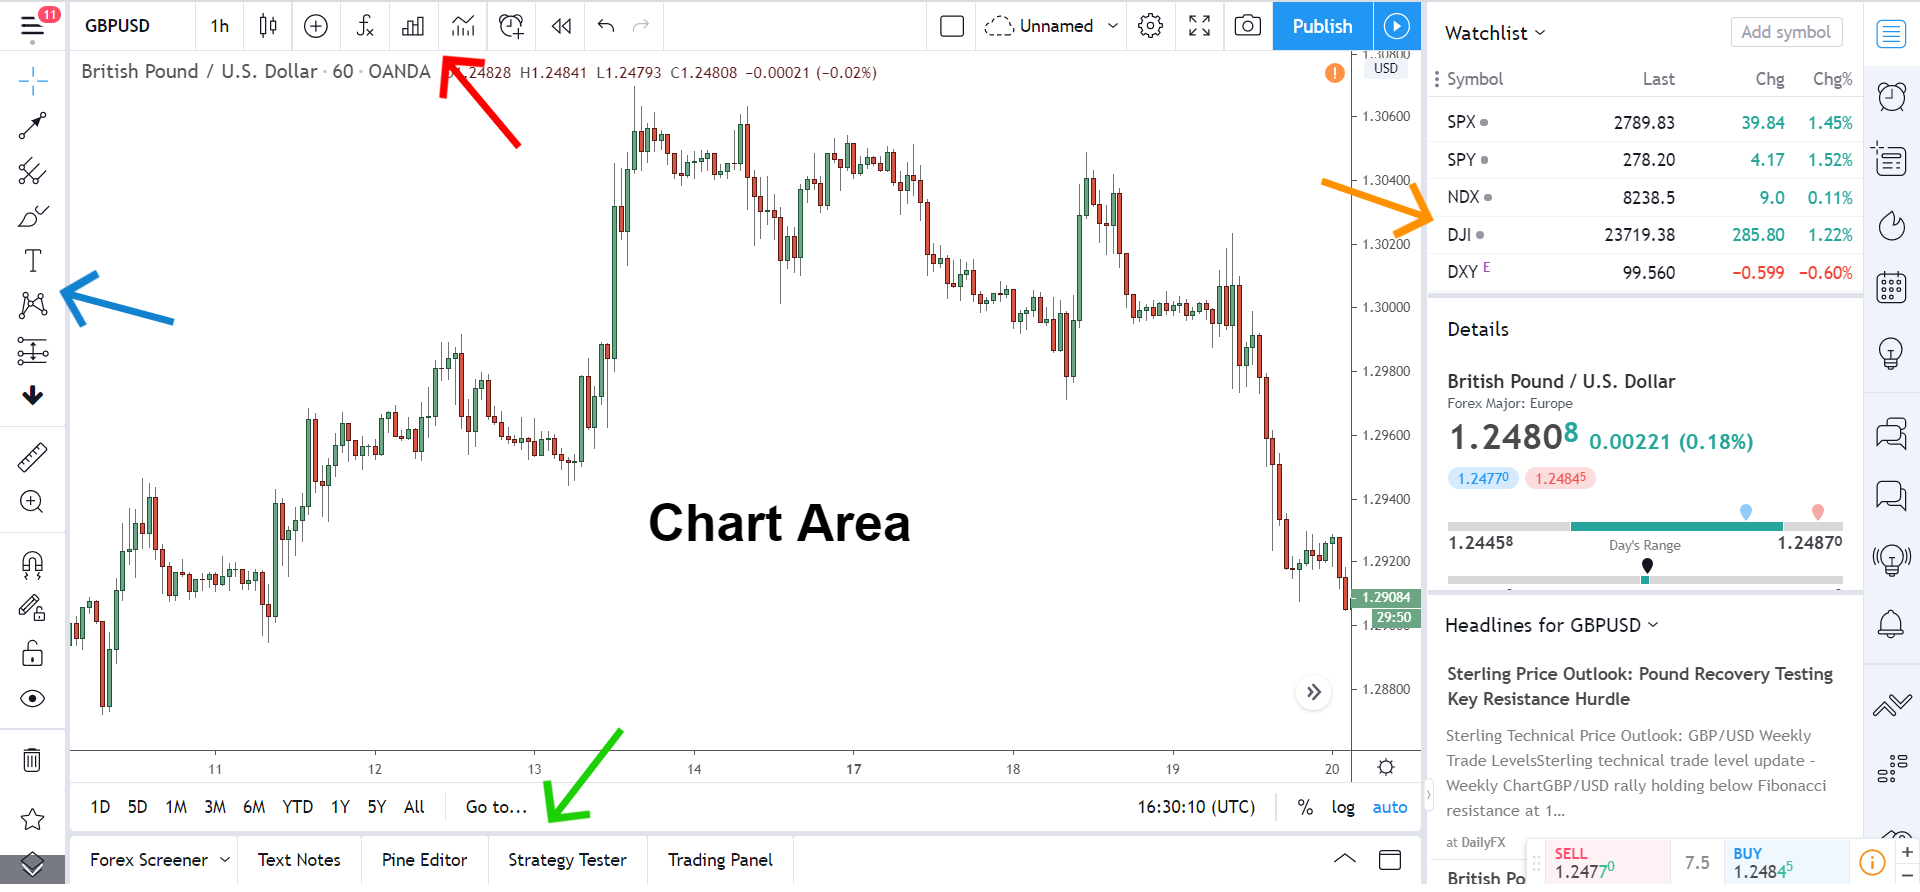 tradingview chart screen 